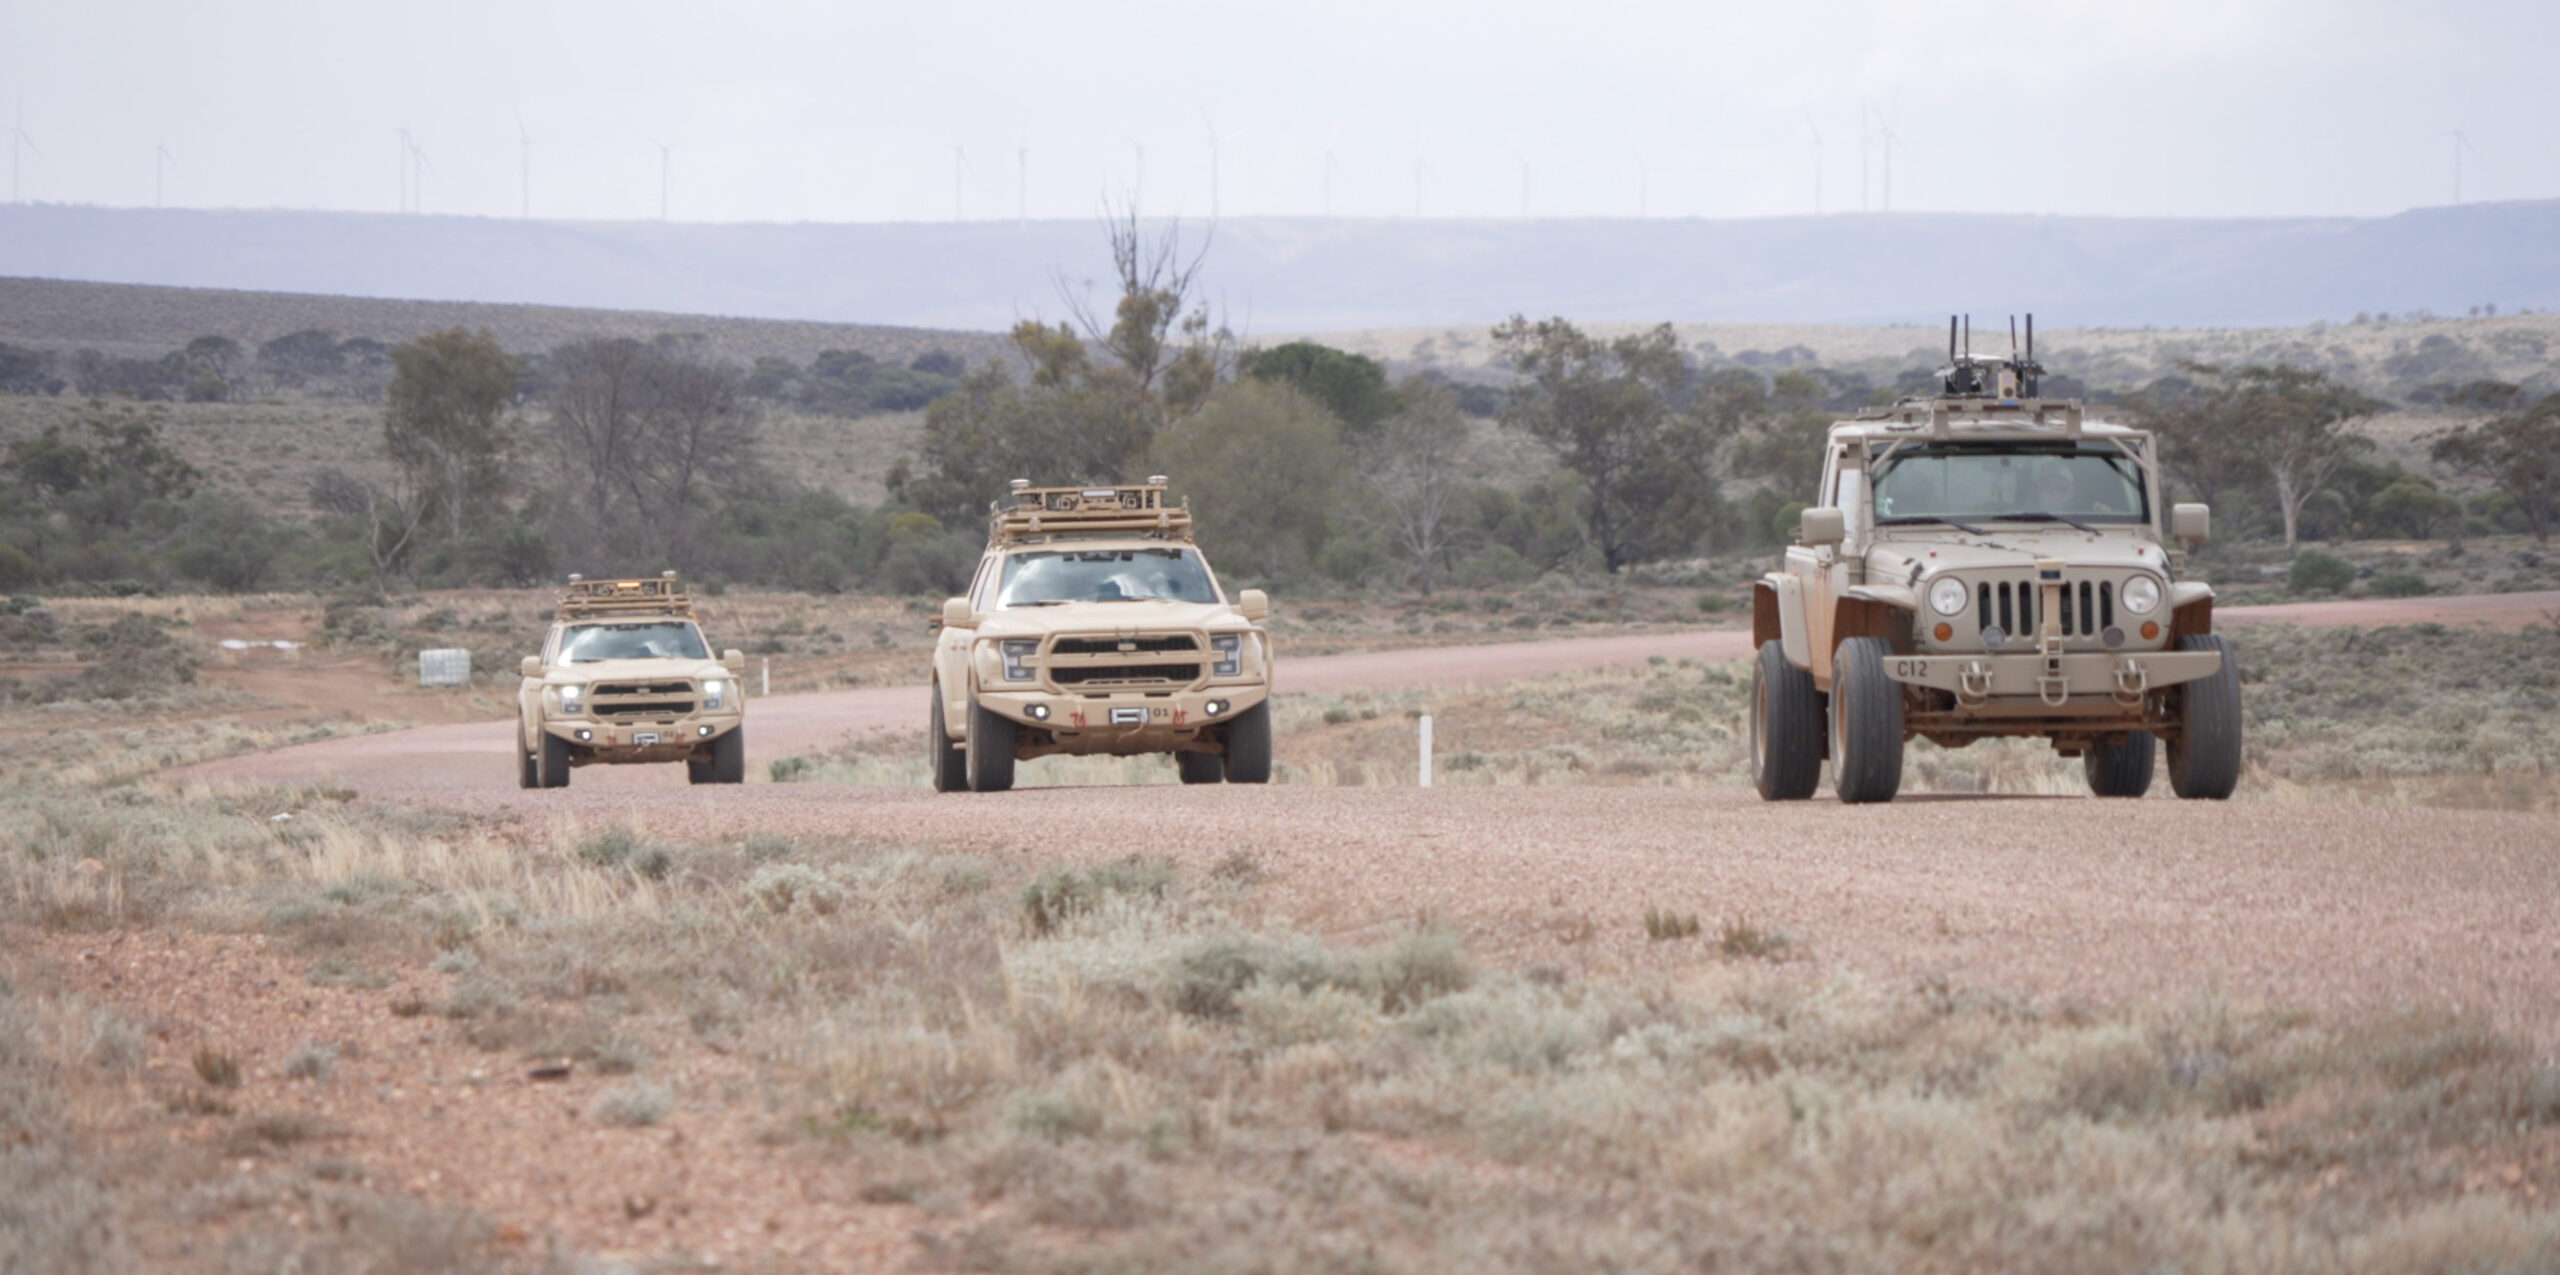 AUKUS nations take aim at robotic ground vehicles under threat of electronic warfare